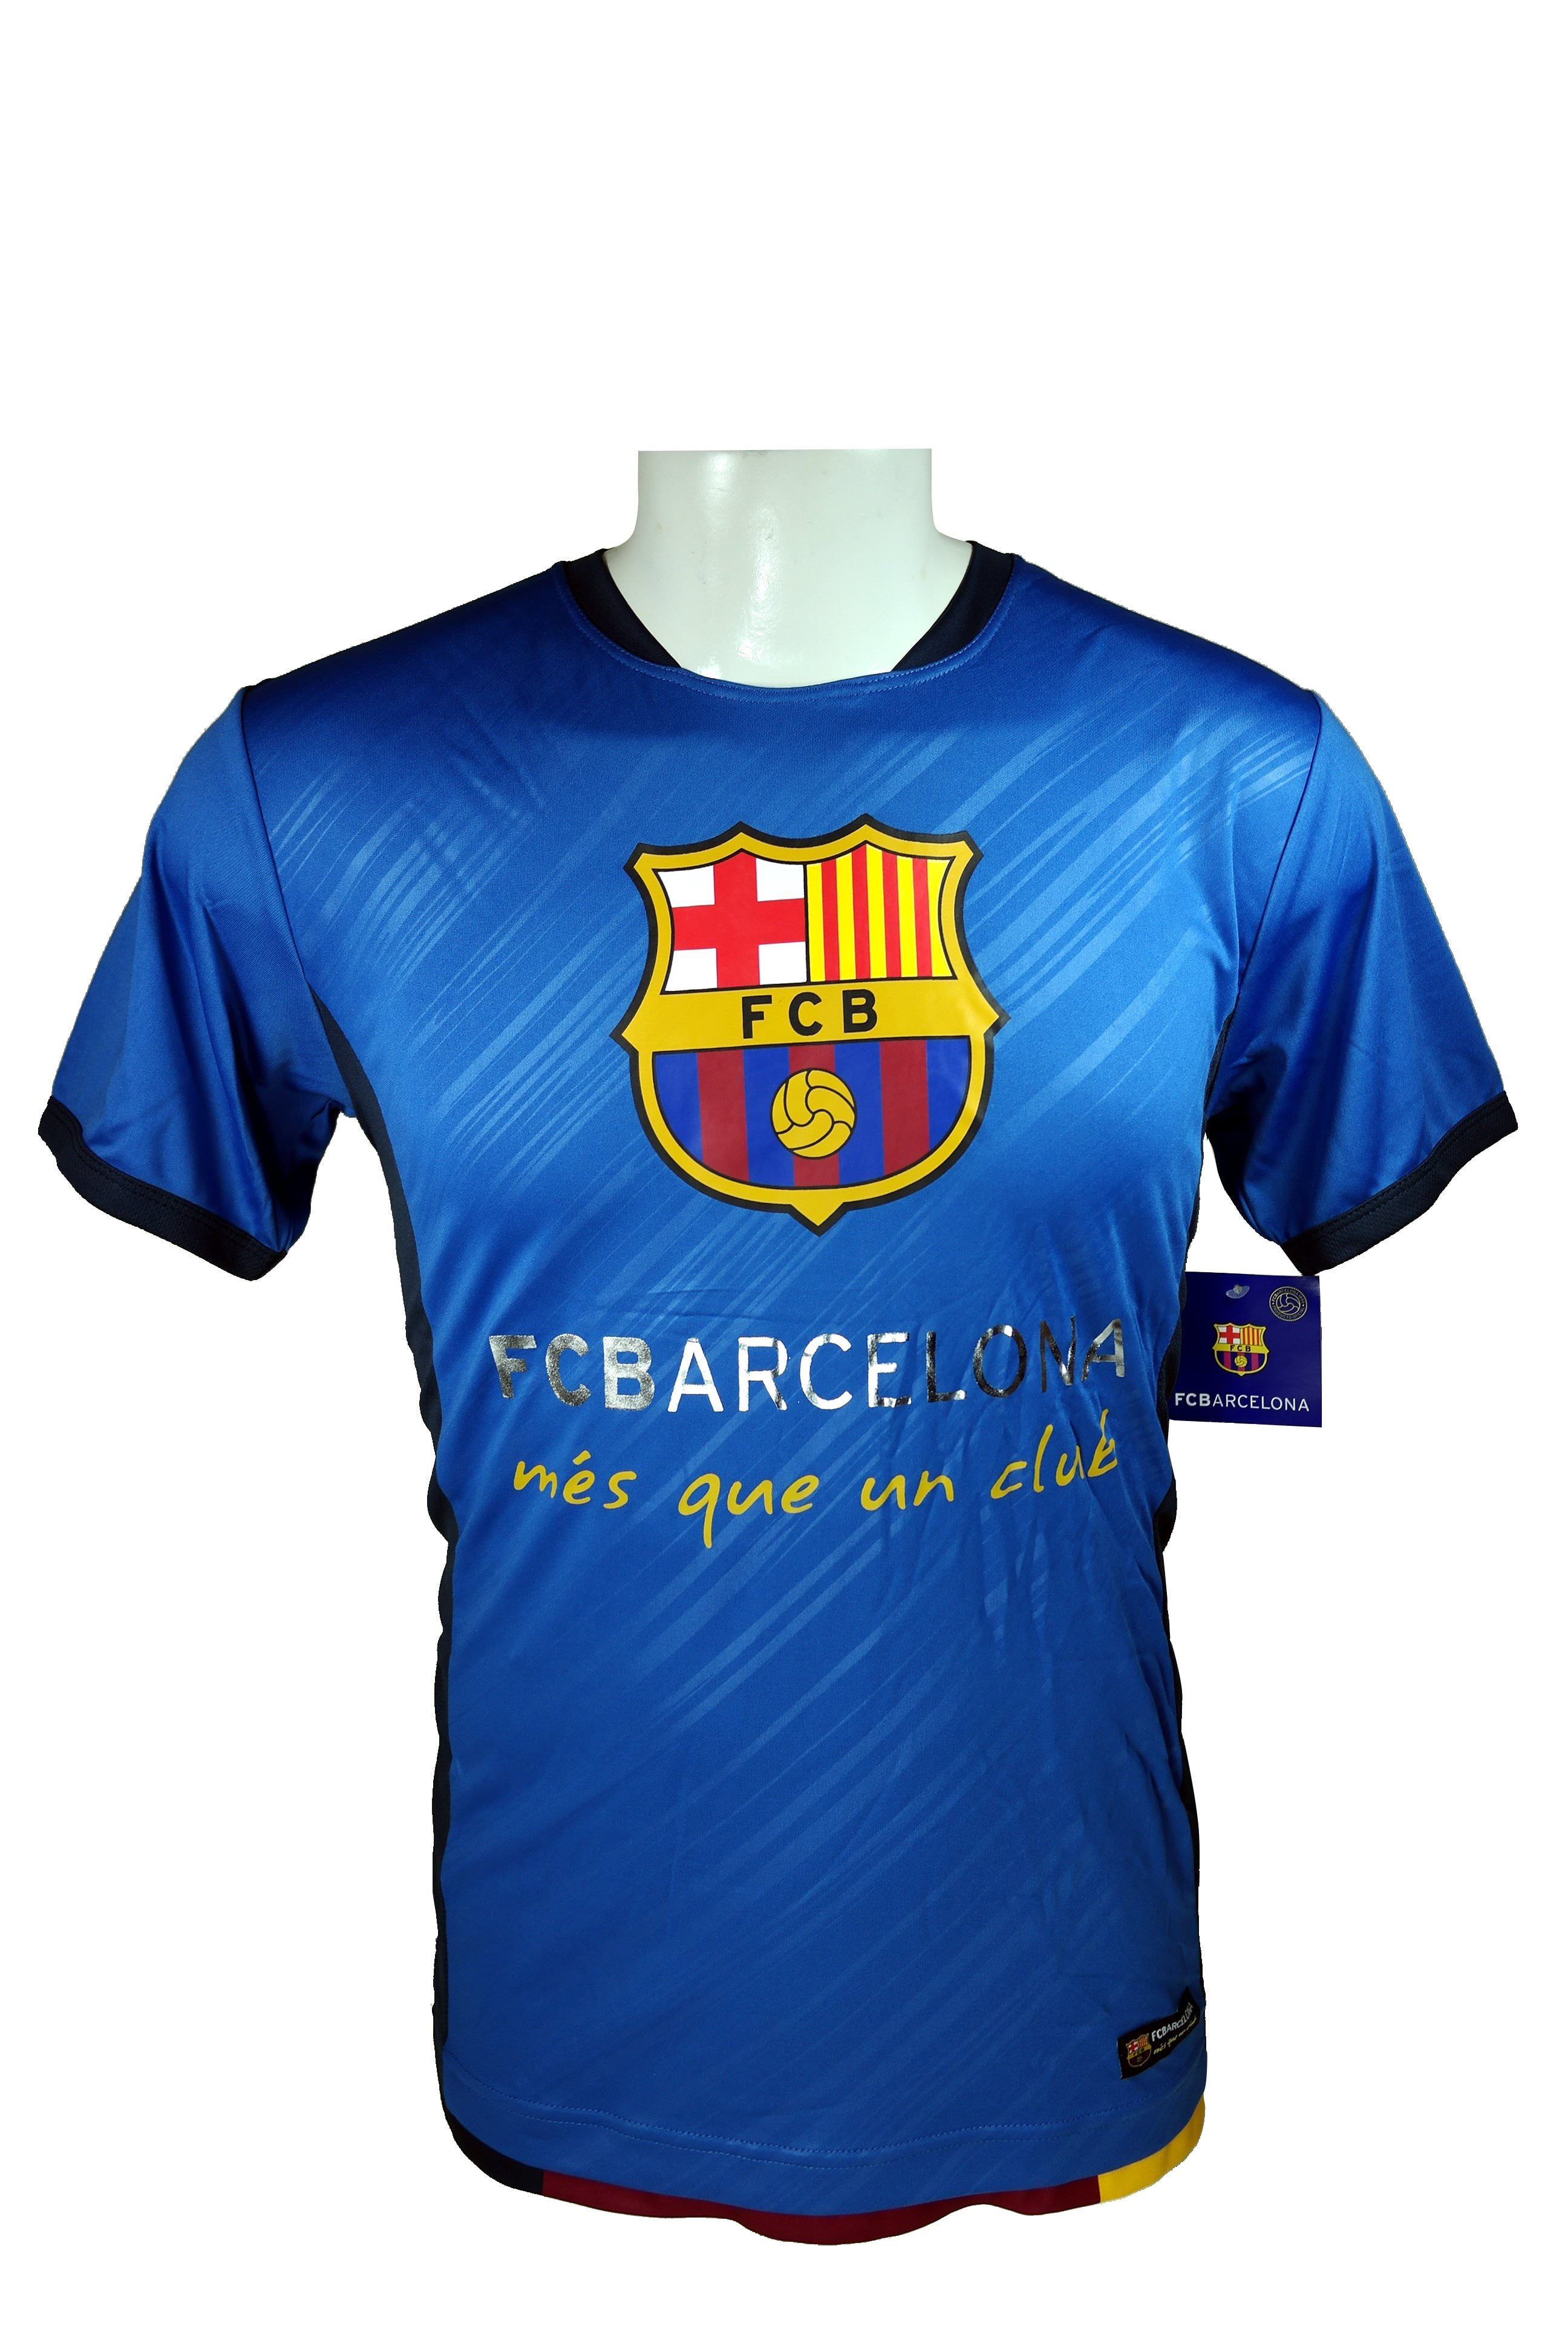 barcelona club t shirt